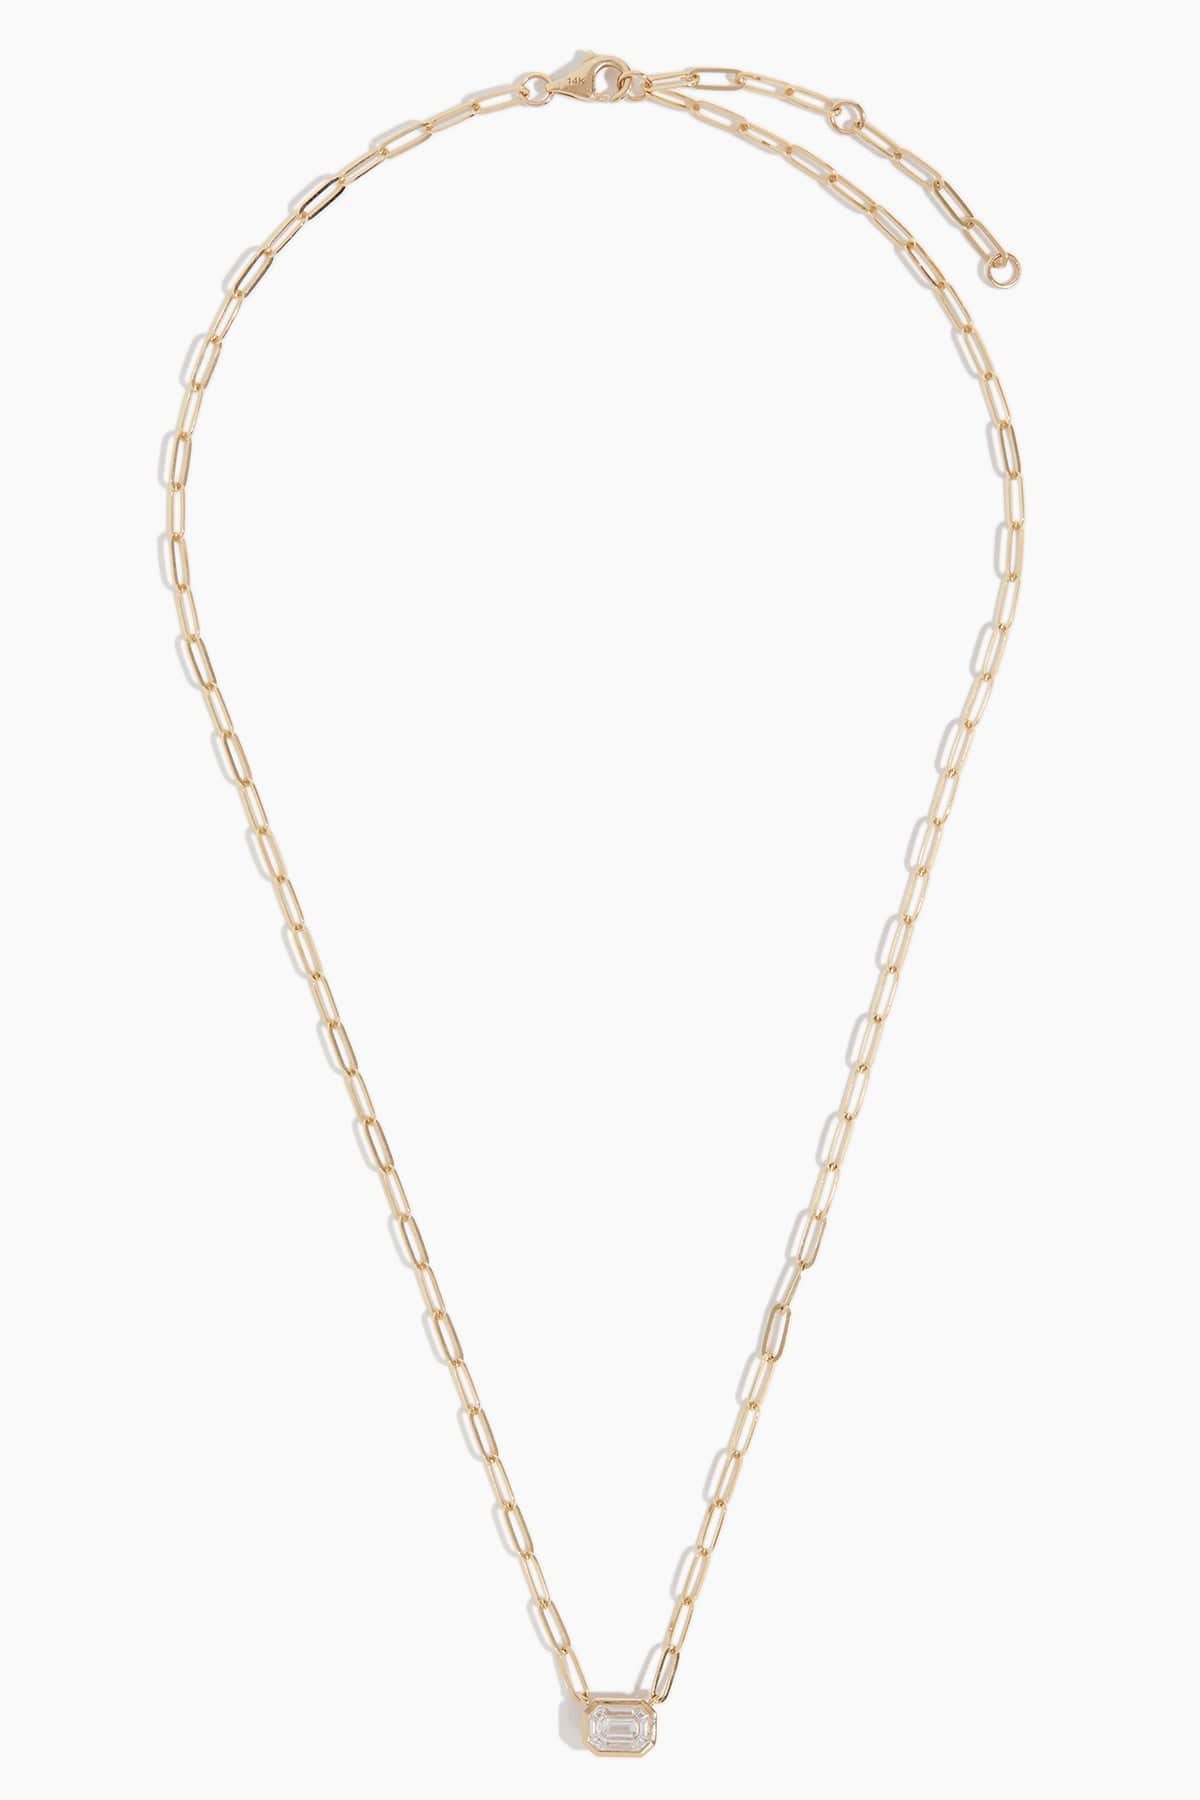 Vintage La Rose Necklaces Gemstone Chain Necklace in 14k Yellow Gold Vintage La Rose Gemstone Chain Necklace in 14k Yellow Gold